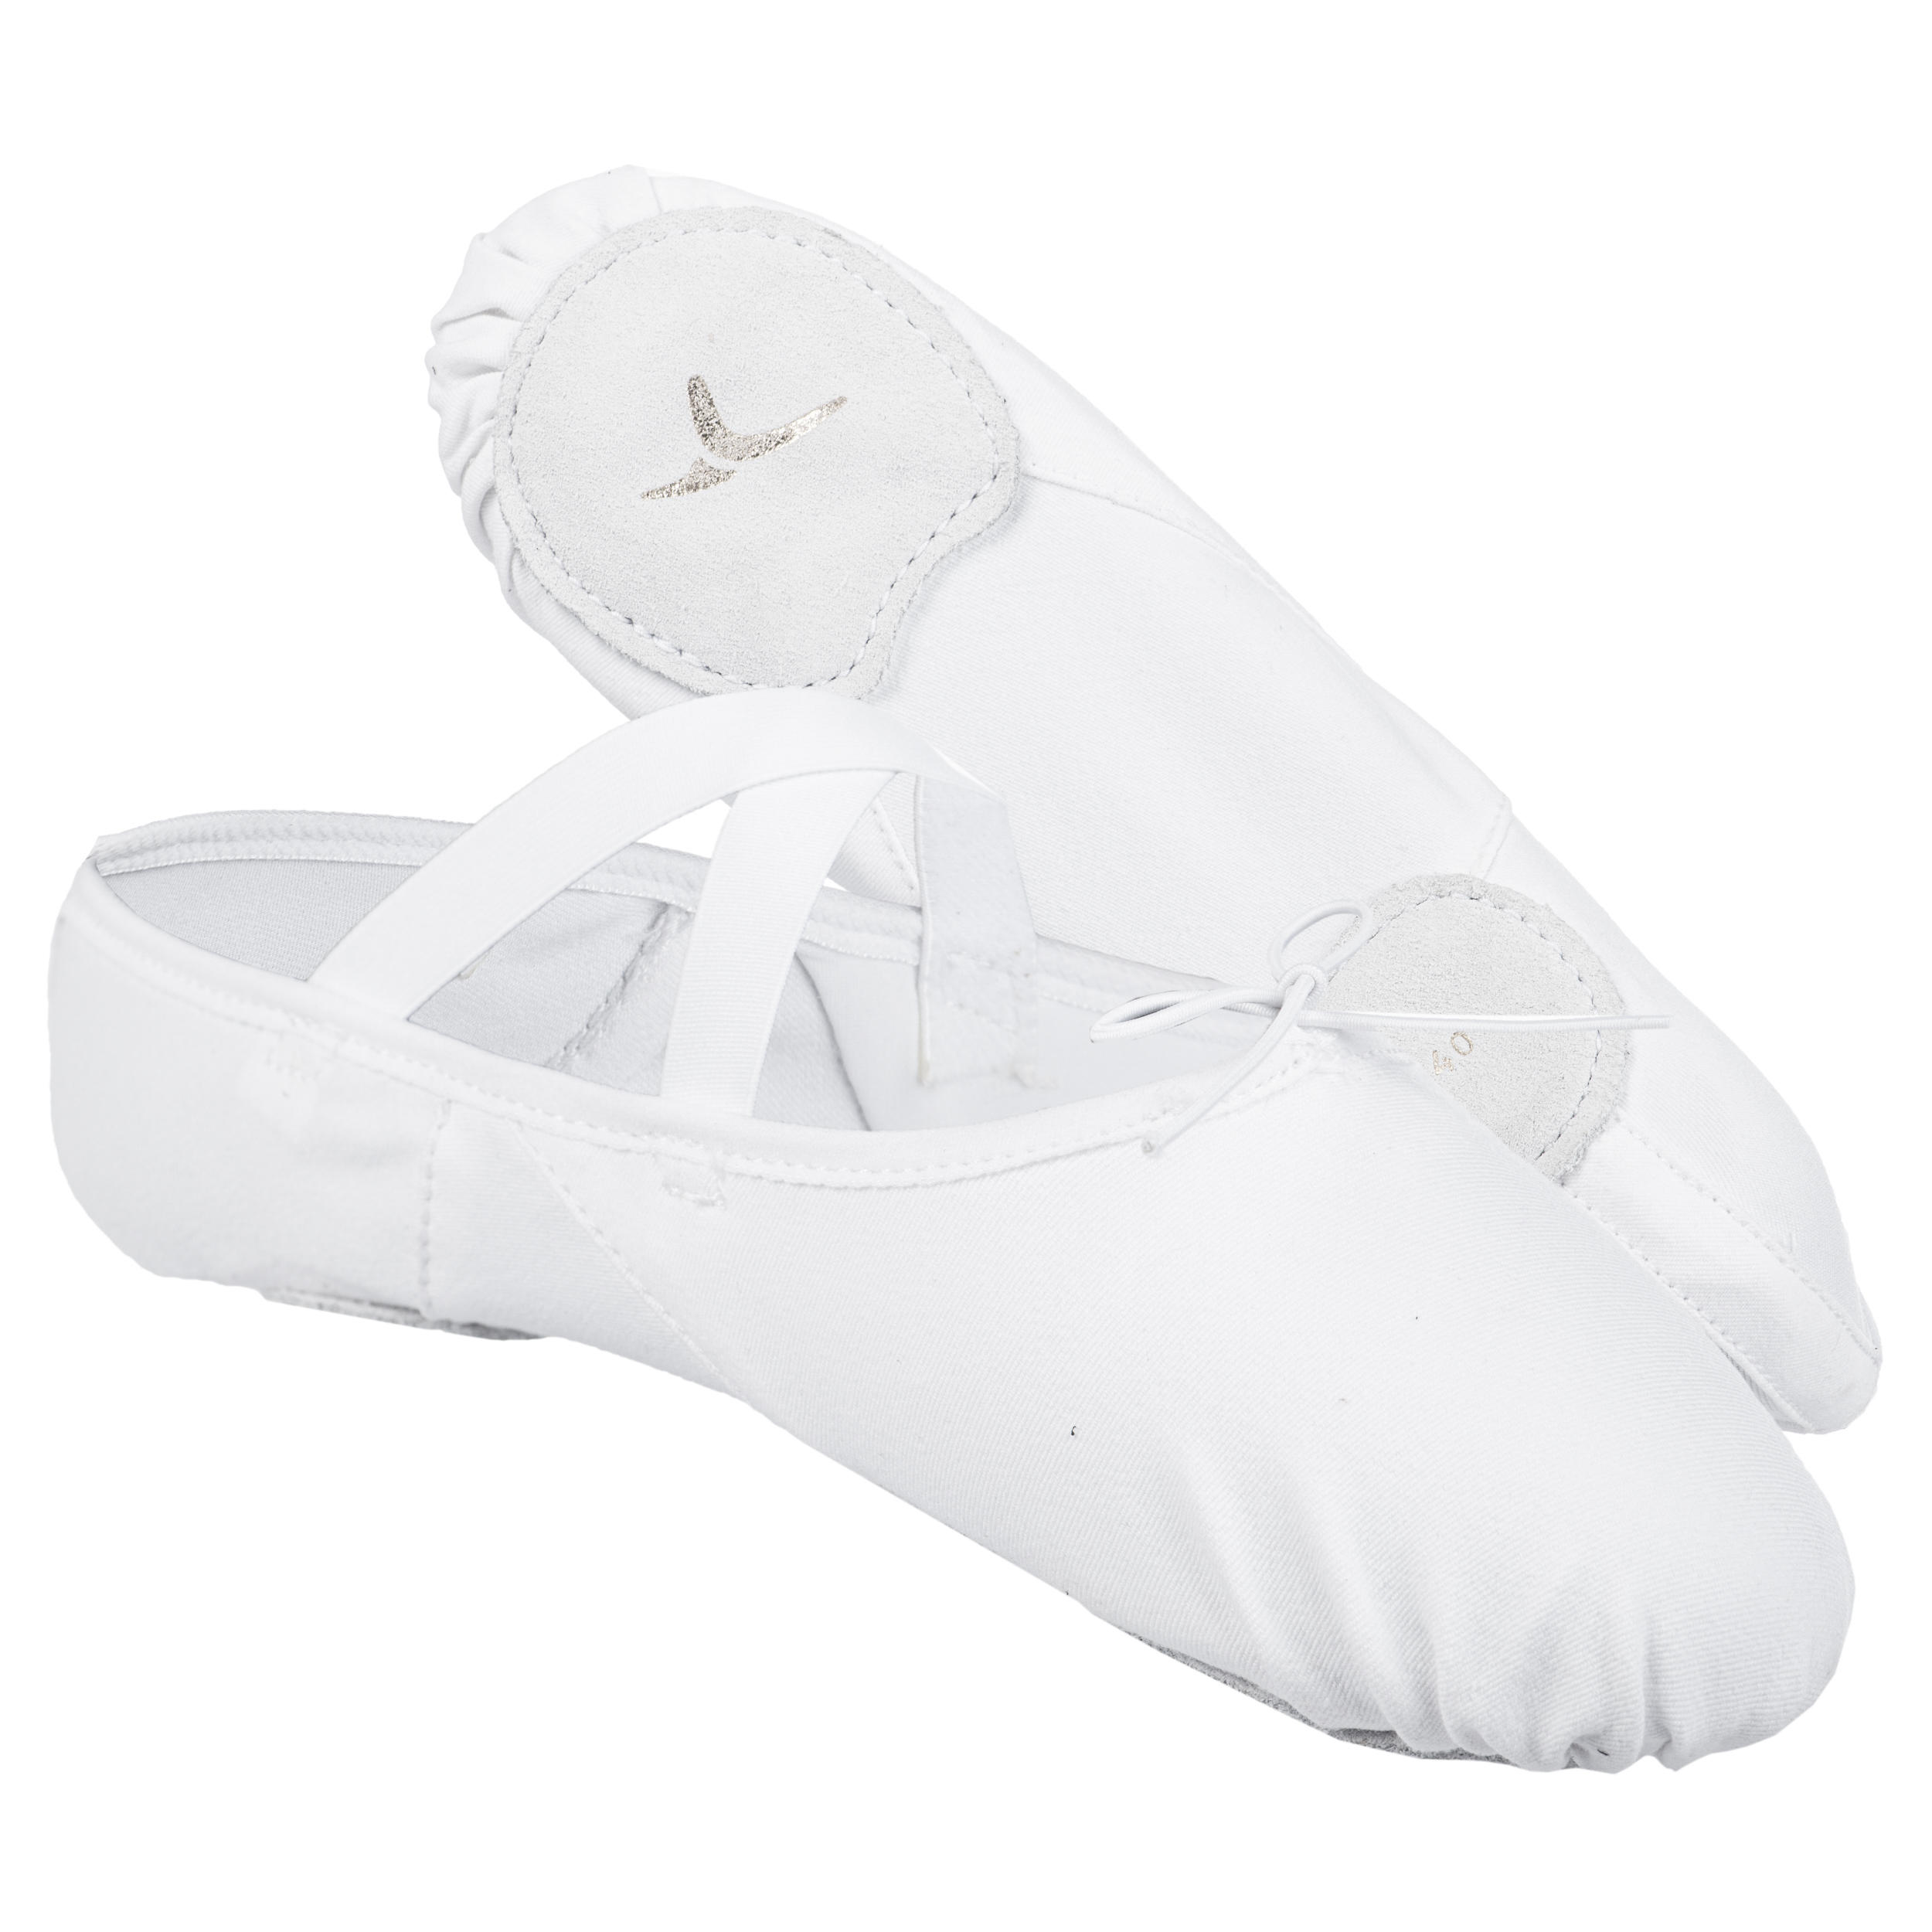 Stretch Canvas Split-Sole Demi-Pointe Ballet Shoes Size 9.5C to 6.5 - White 4/5